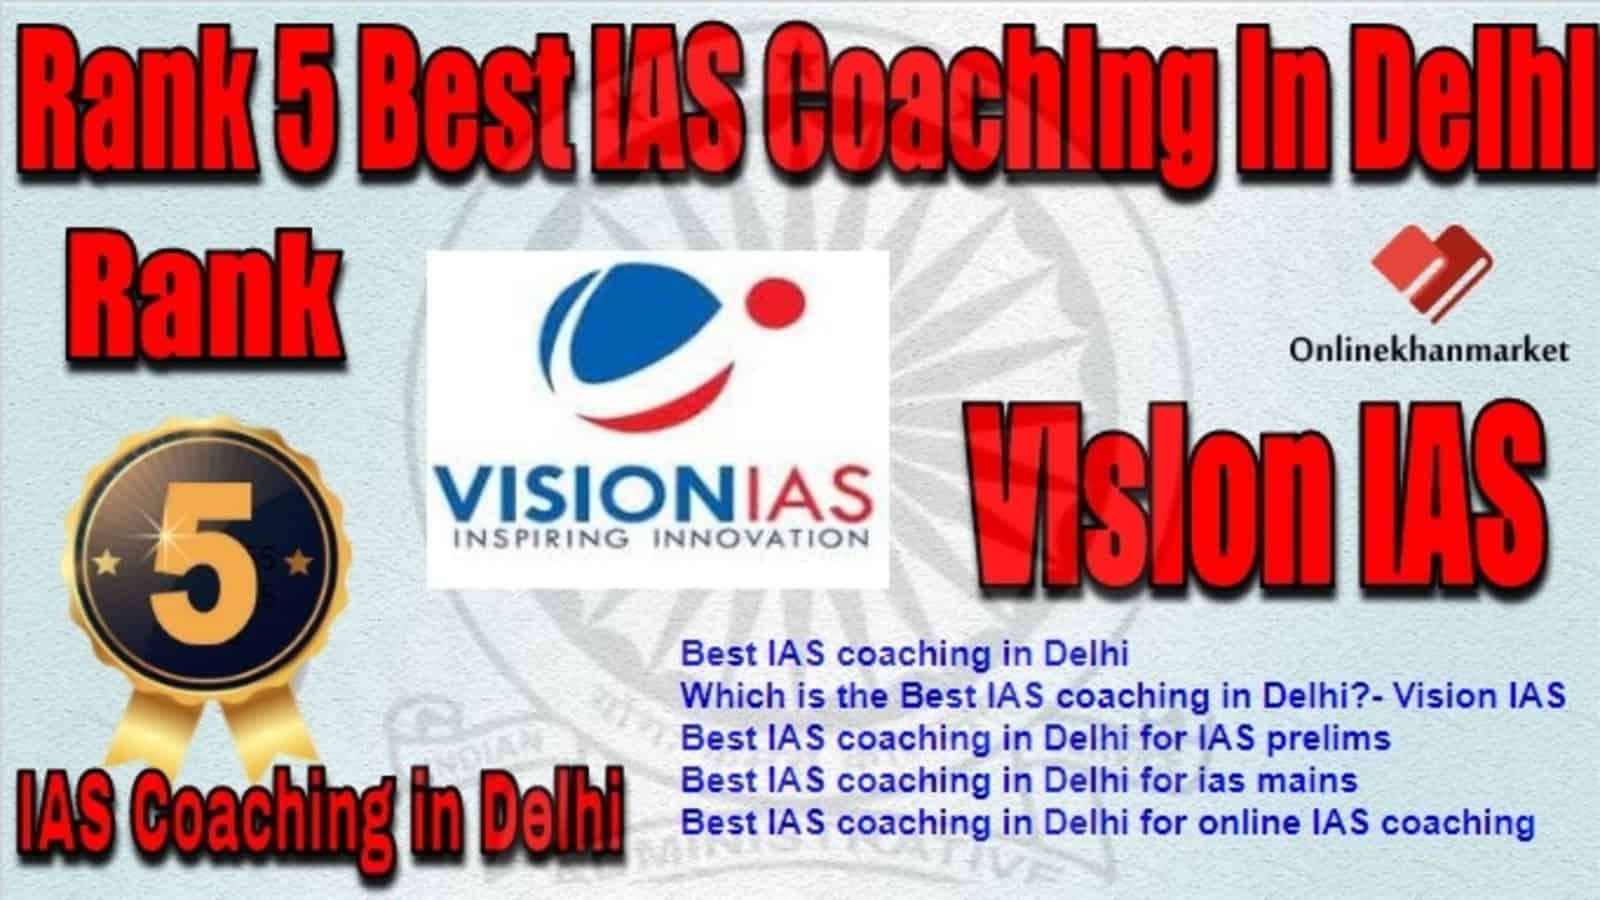 Rank 5 Best IAS Coaching in Delhi Vision IAS